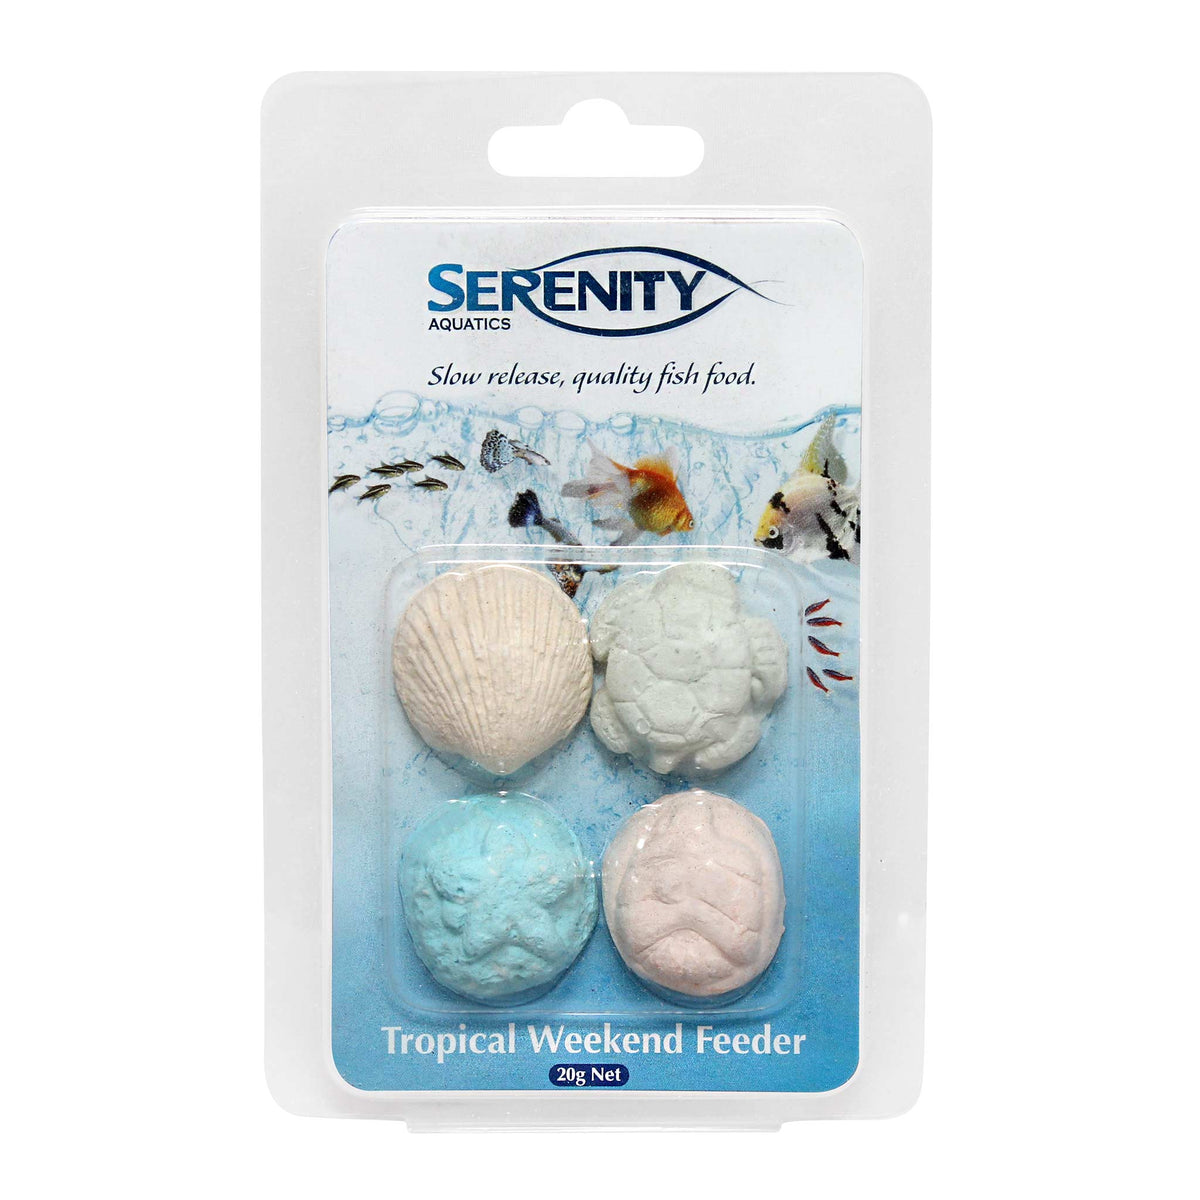 Serenity Aquatics Tropical Weekend Feeder Blocks 4 Pack